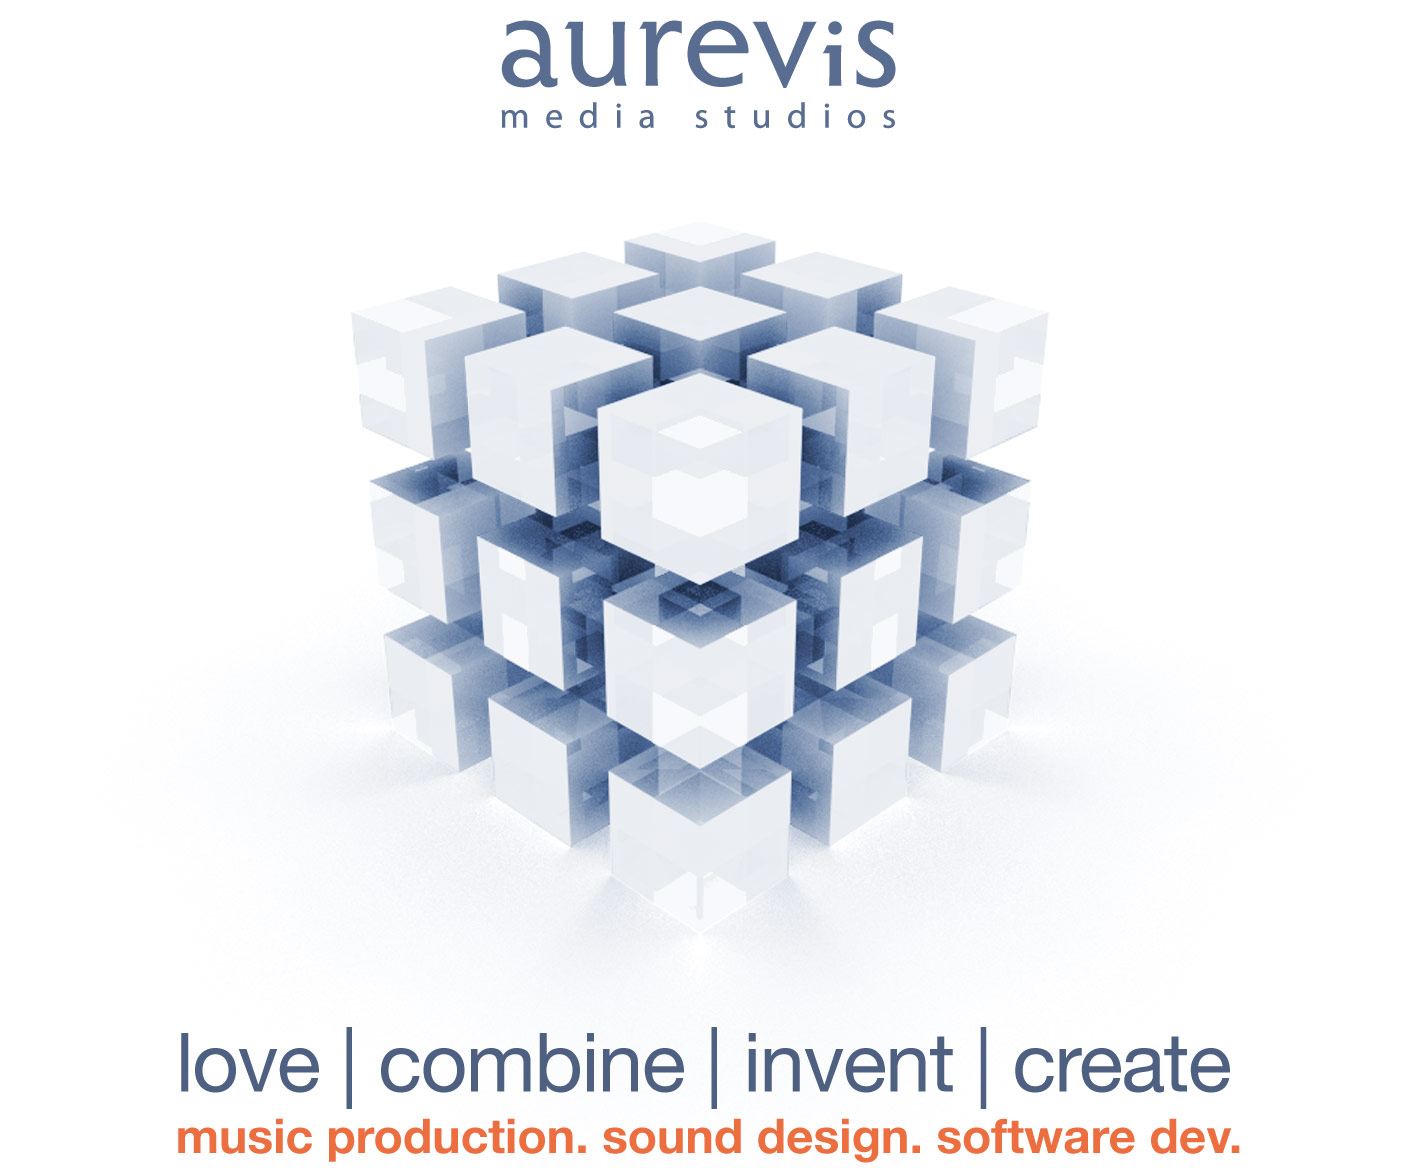 aurevis media studios - love | combine | invent | create - music production. sound design. software dev.